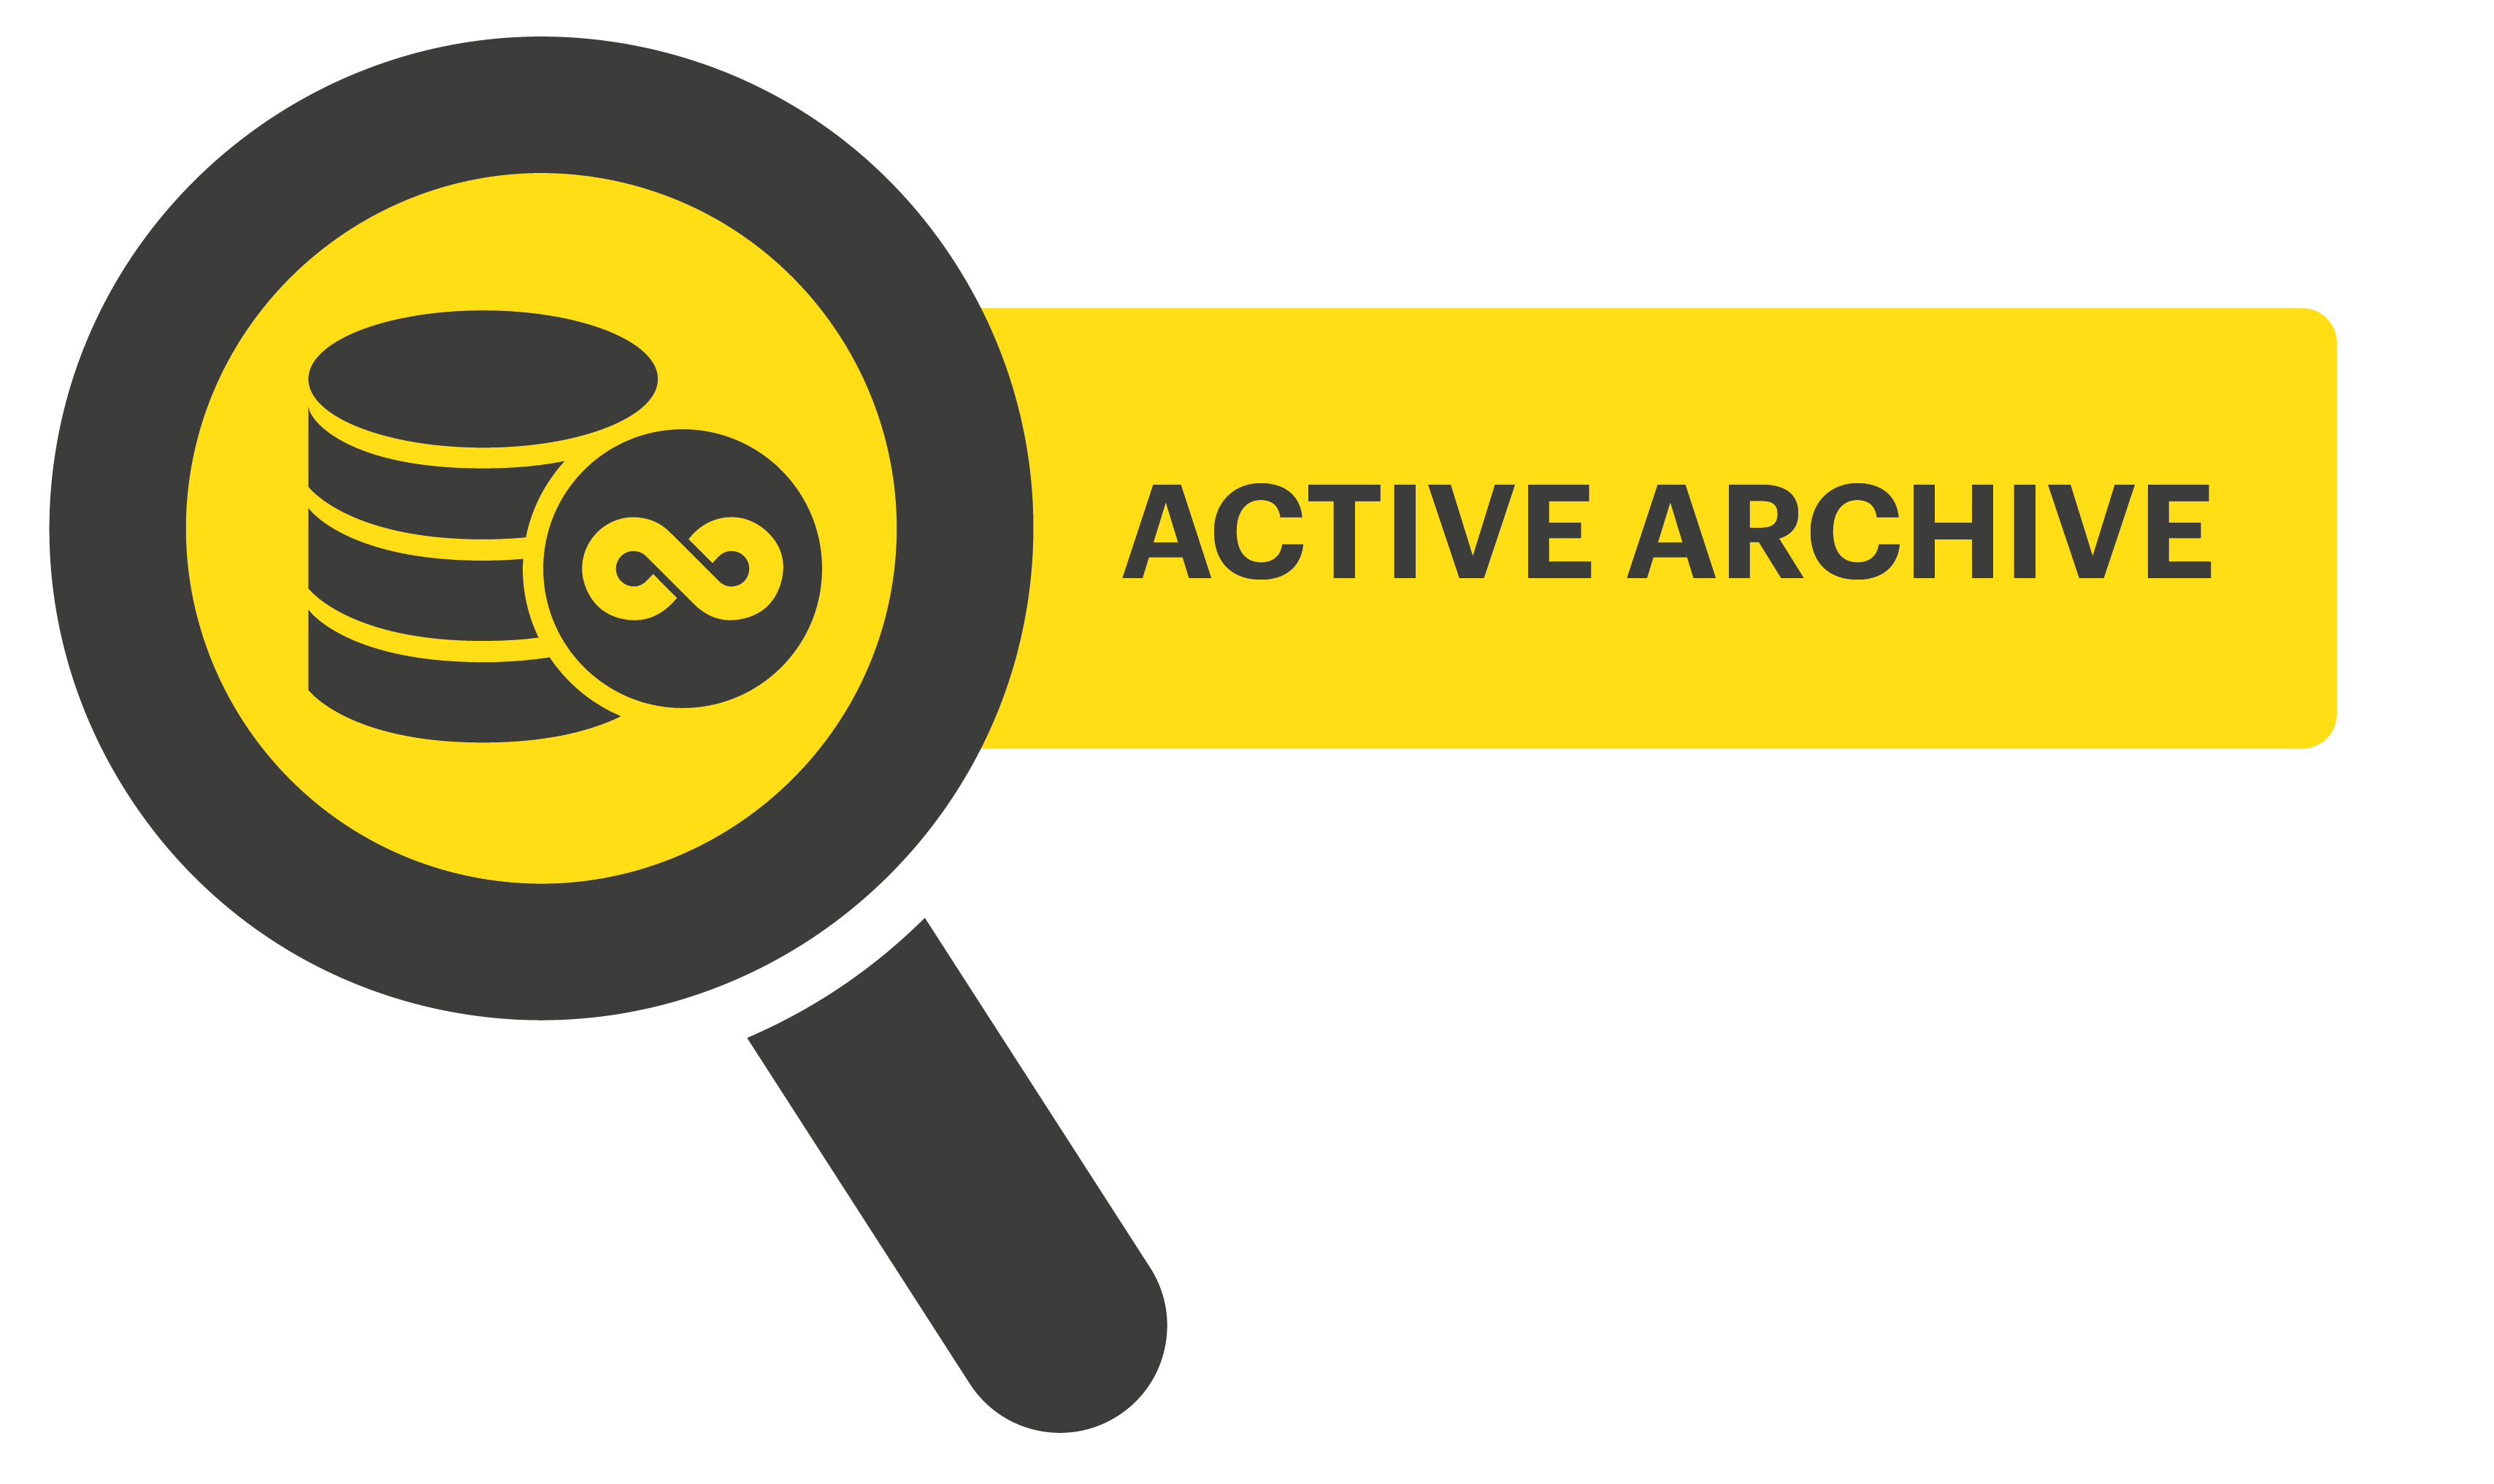 Active archive icon